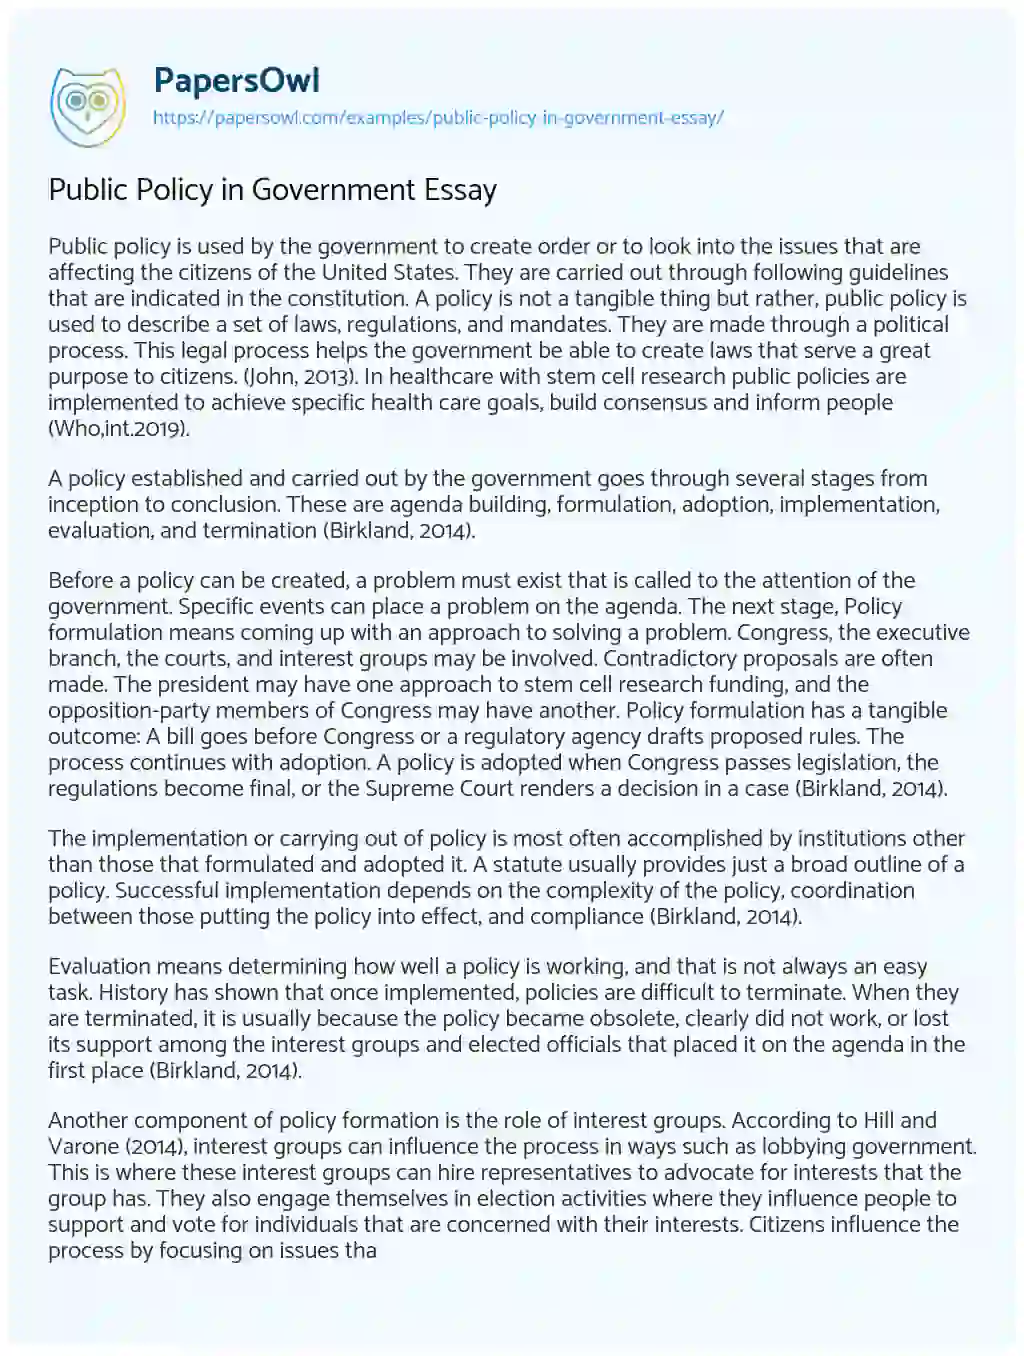 Public Policy in Government Essay essay